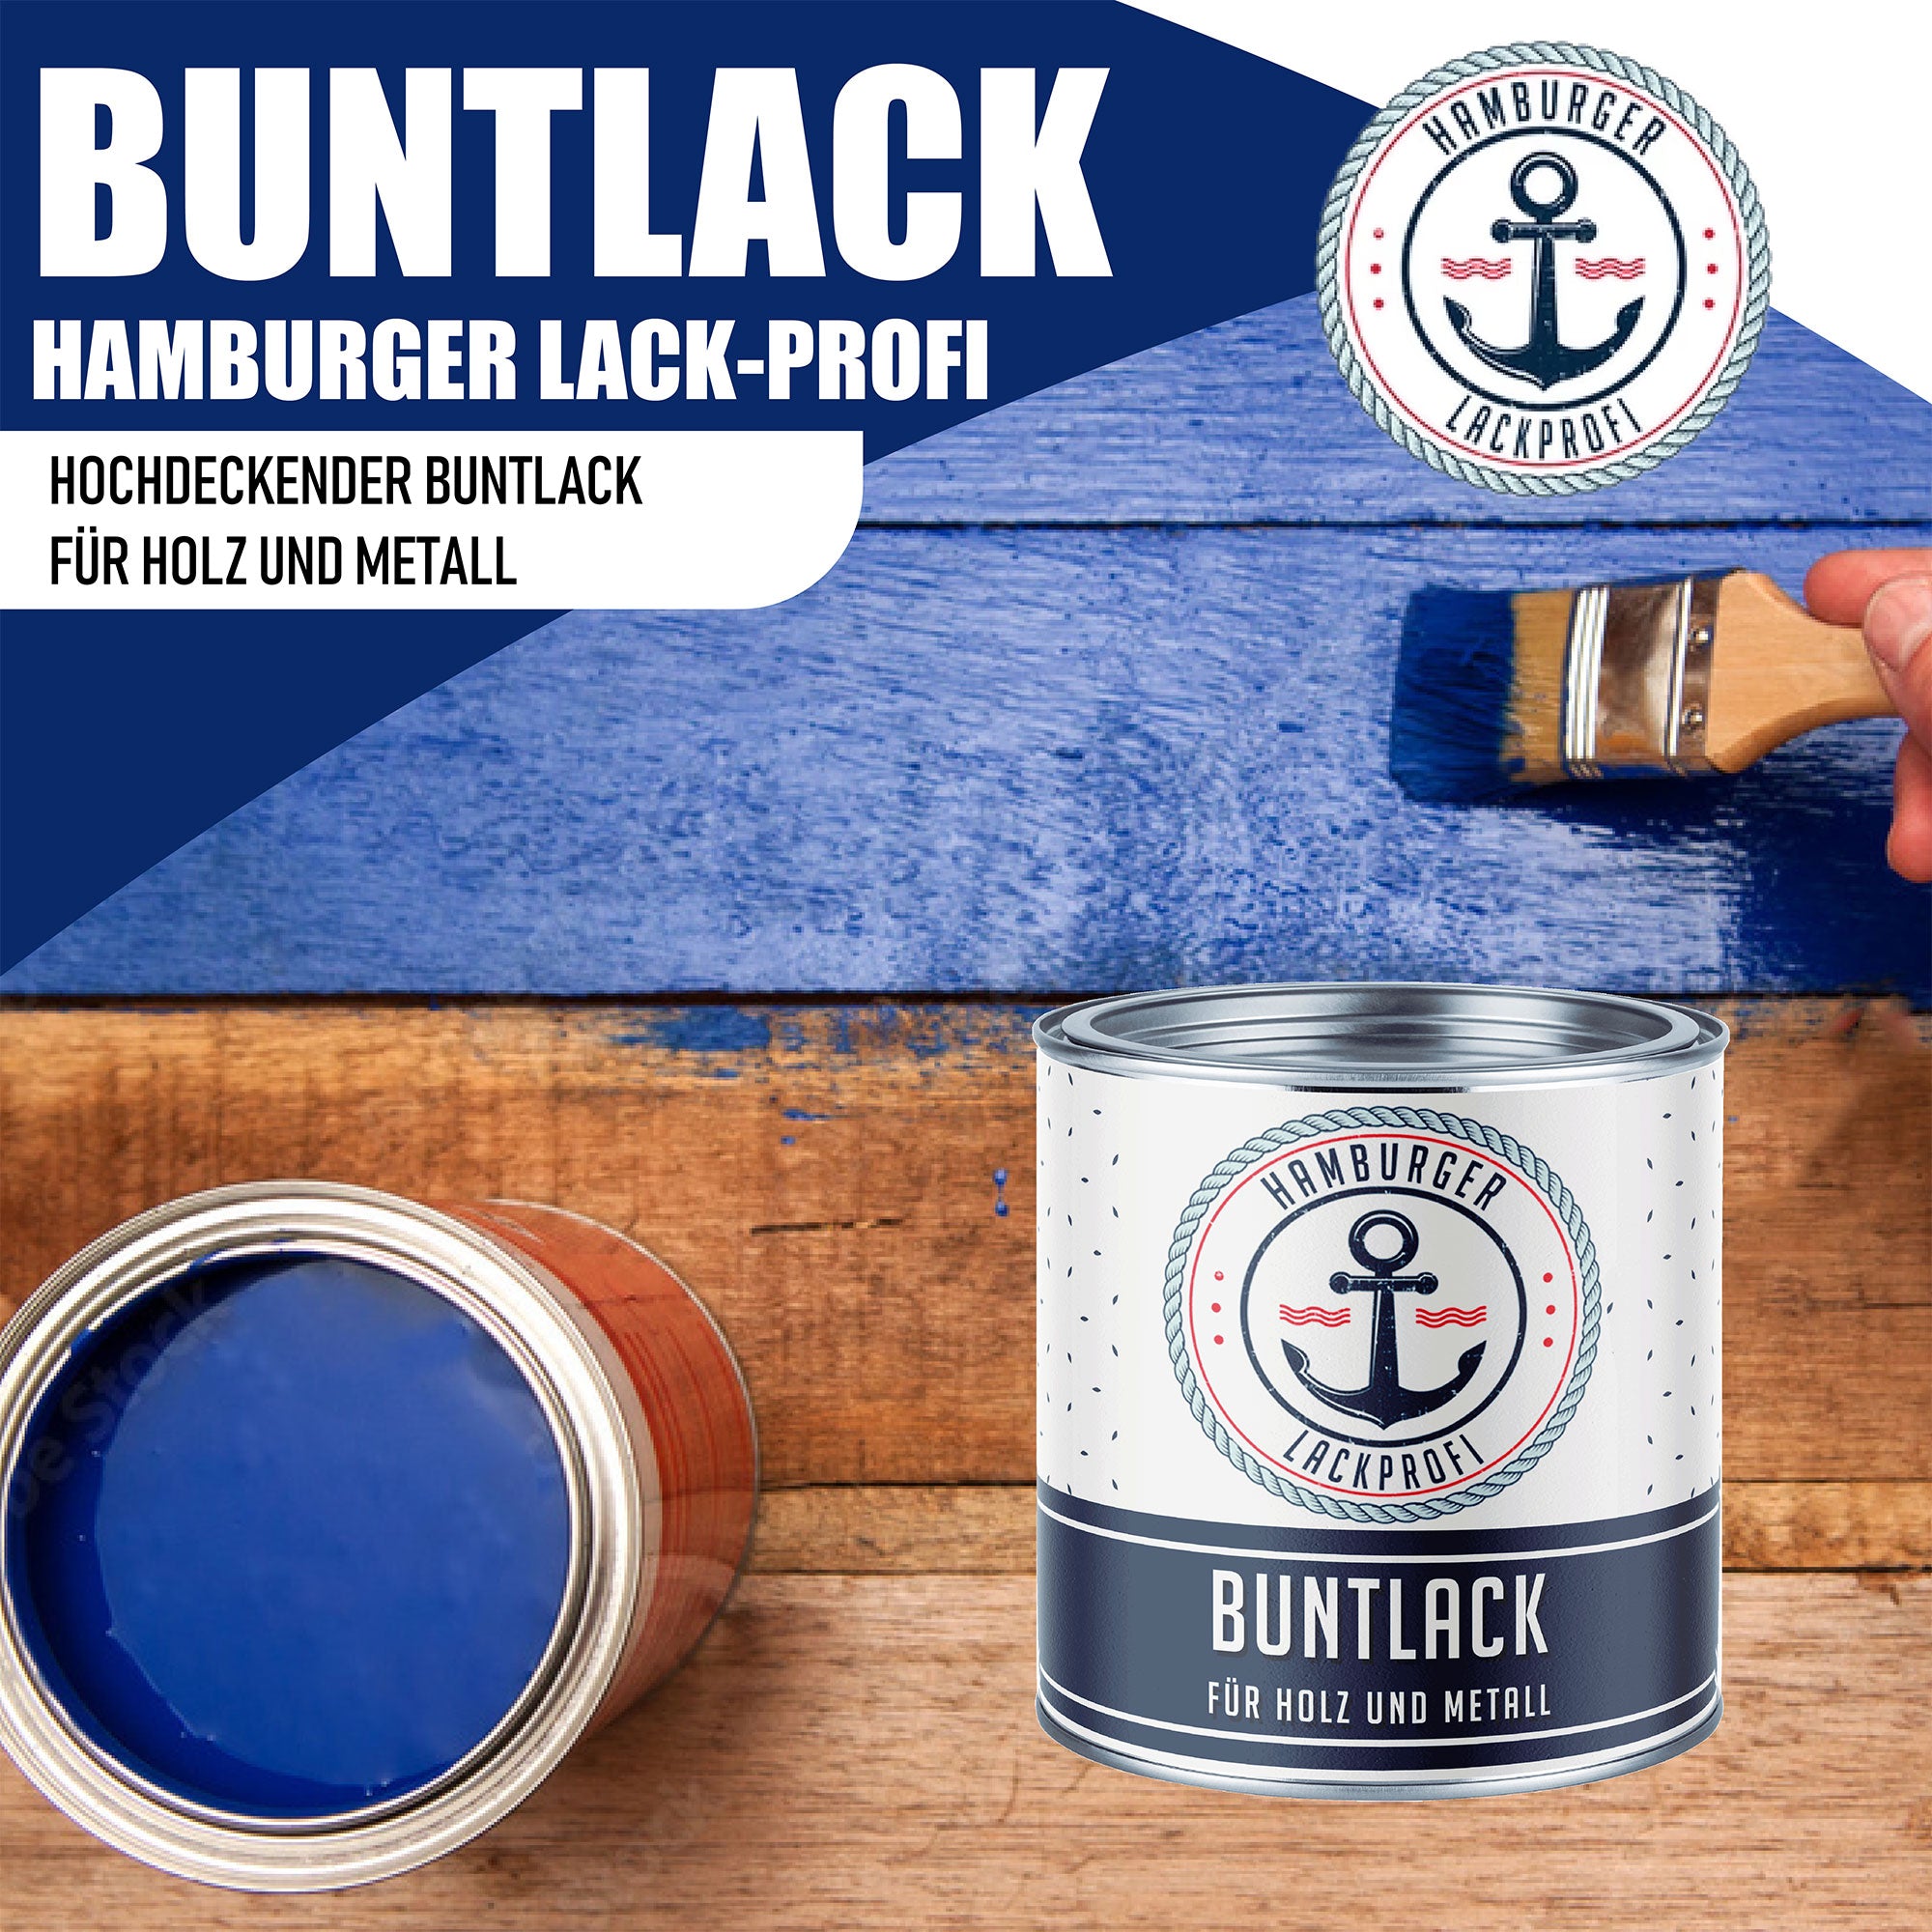 Hamburger Lack-Profi Buntlack Gelbgrau RAL 7034 - Robuster Kunstharzlack